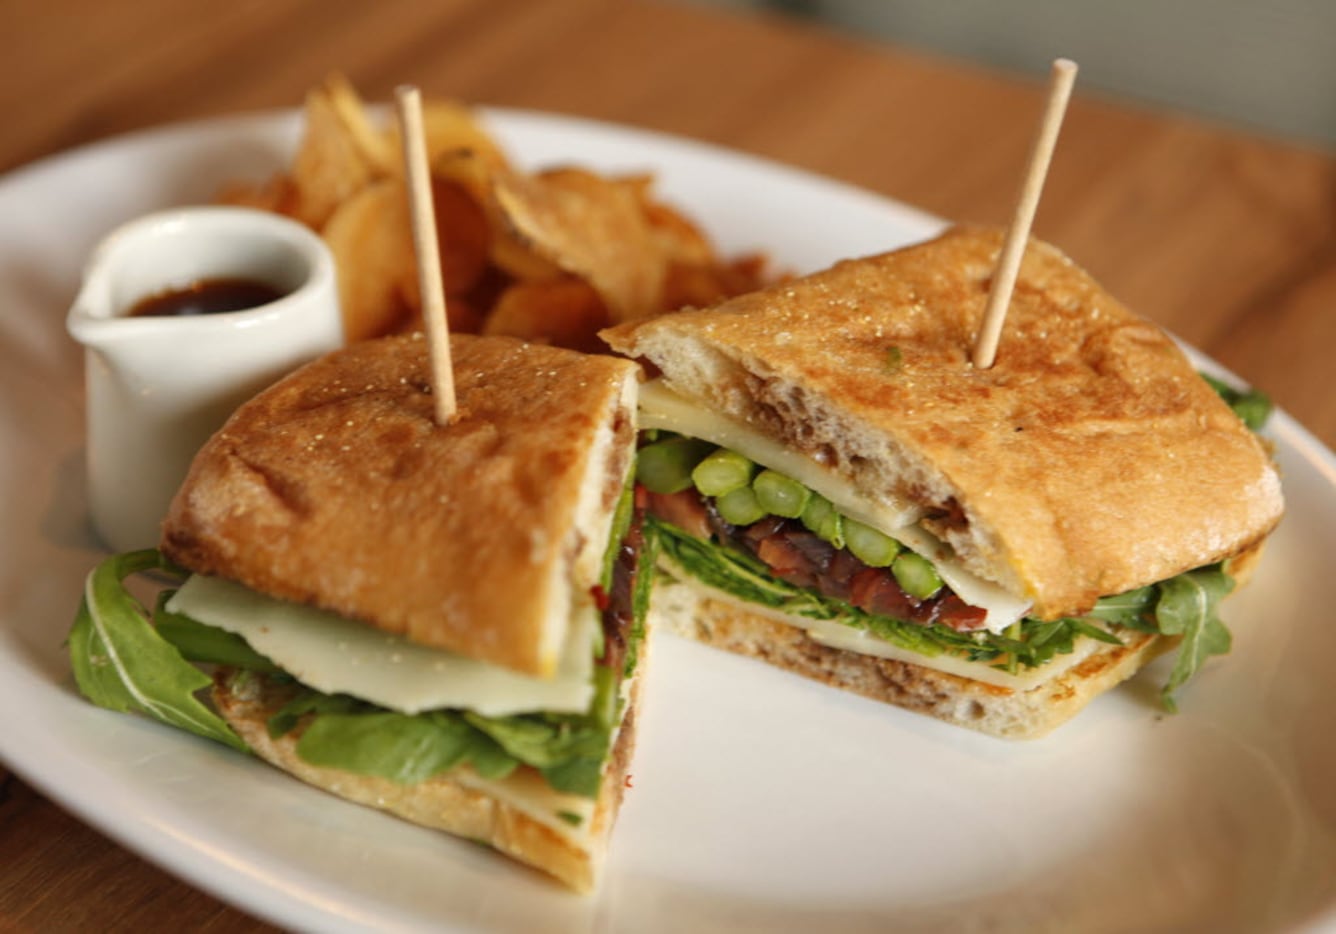 East Hampton Sandwich Co. serves an asparagus and gruyere sandwich.